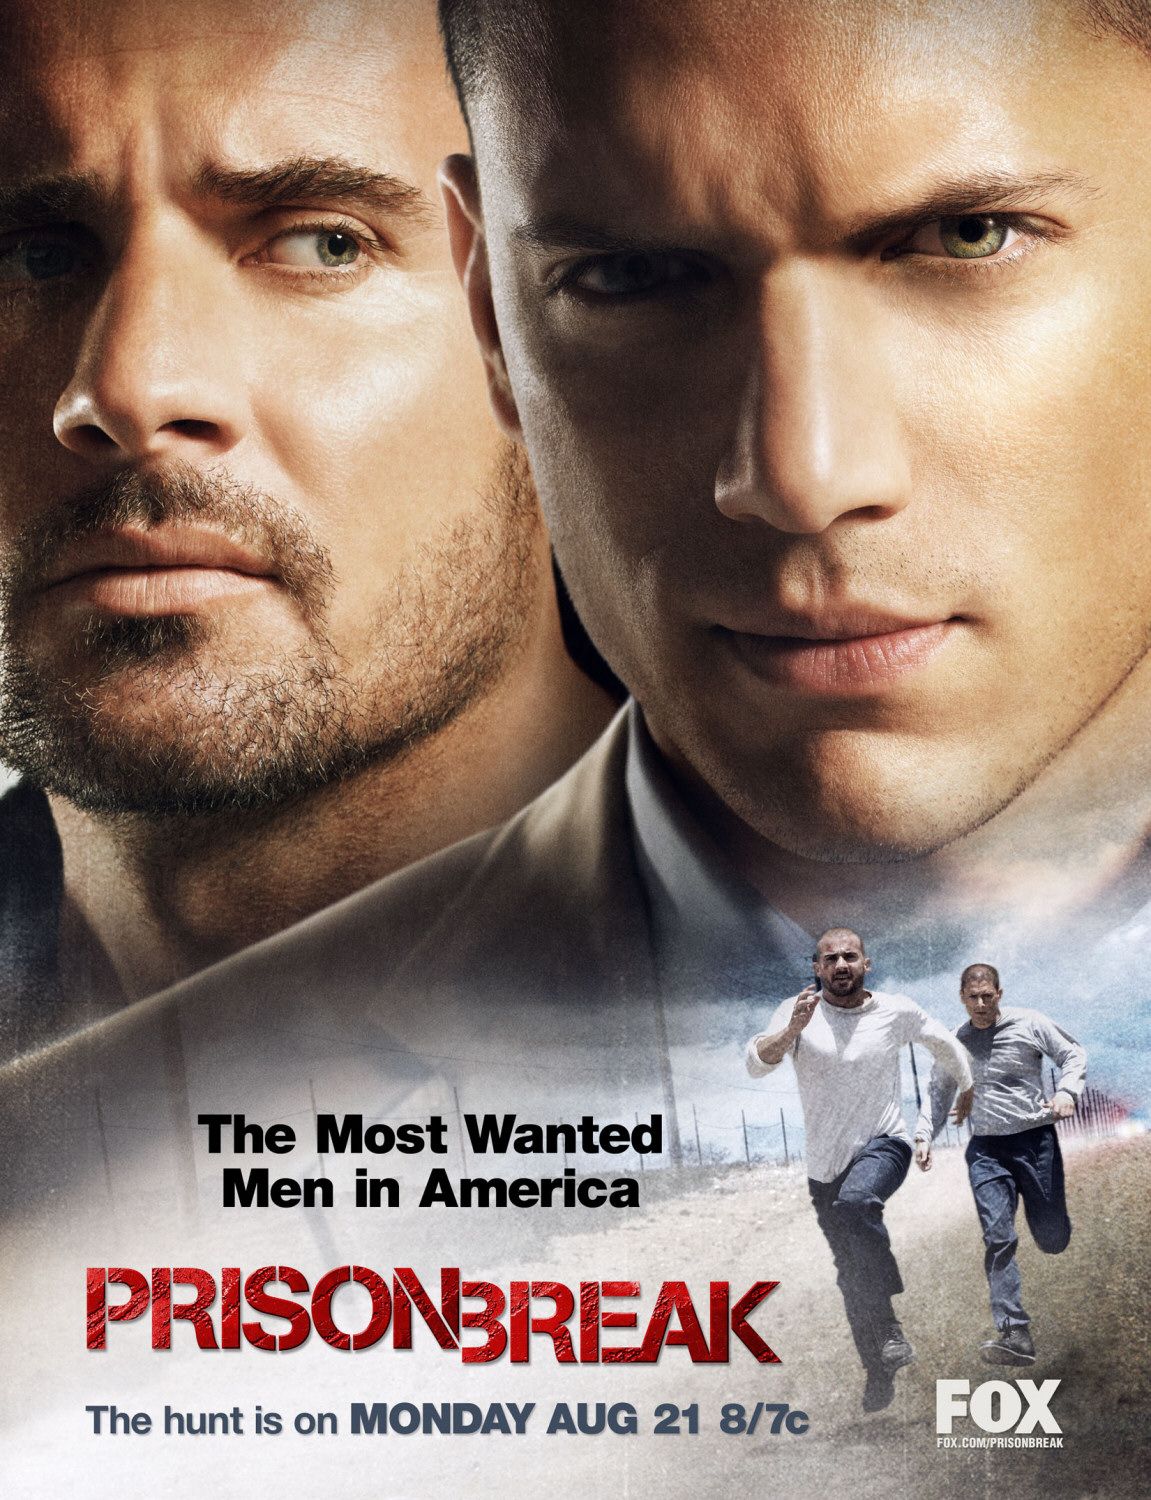 prison break season 2 subtitles english download